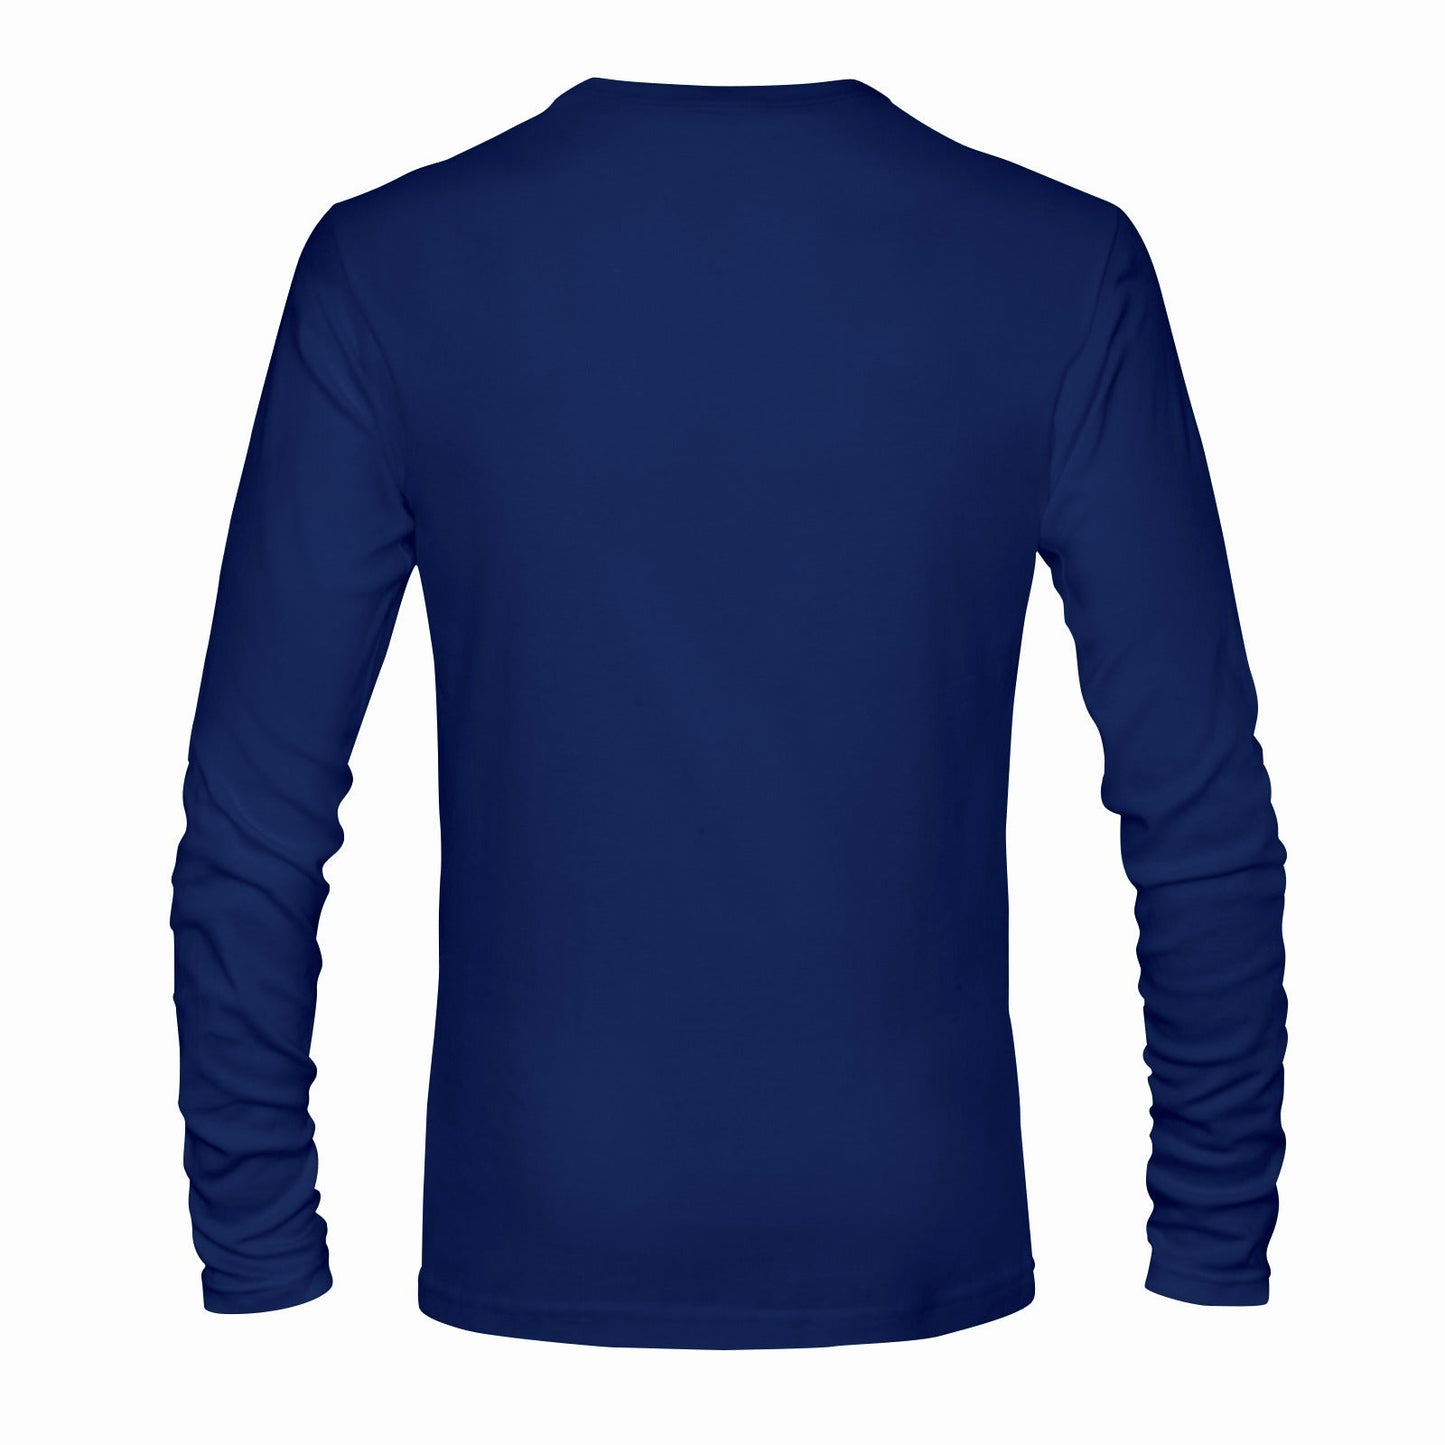 PIT LANE CLOTHING Lightweight 100% Cotton Long Sleeve Tee  - Navy